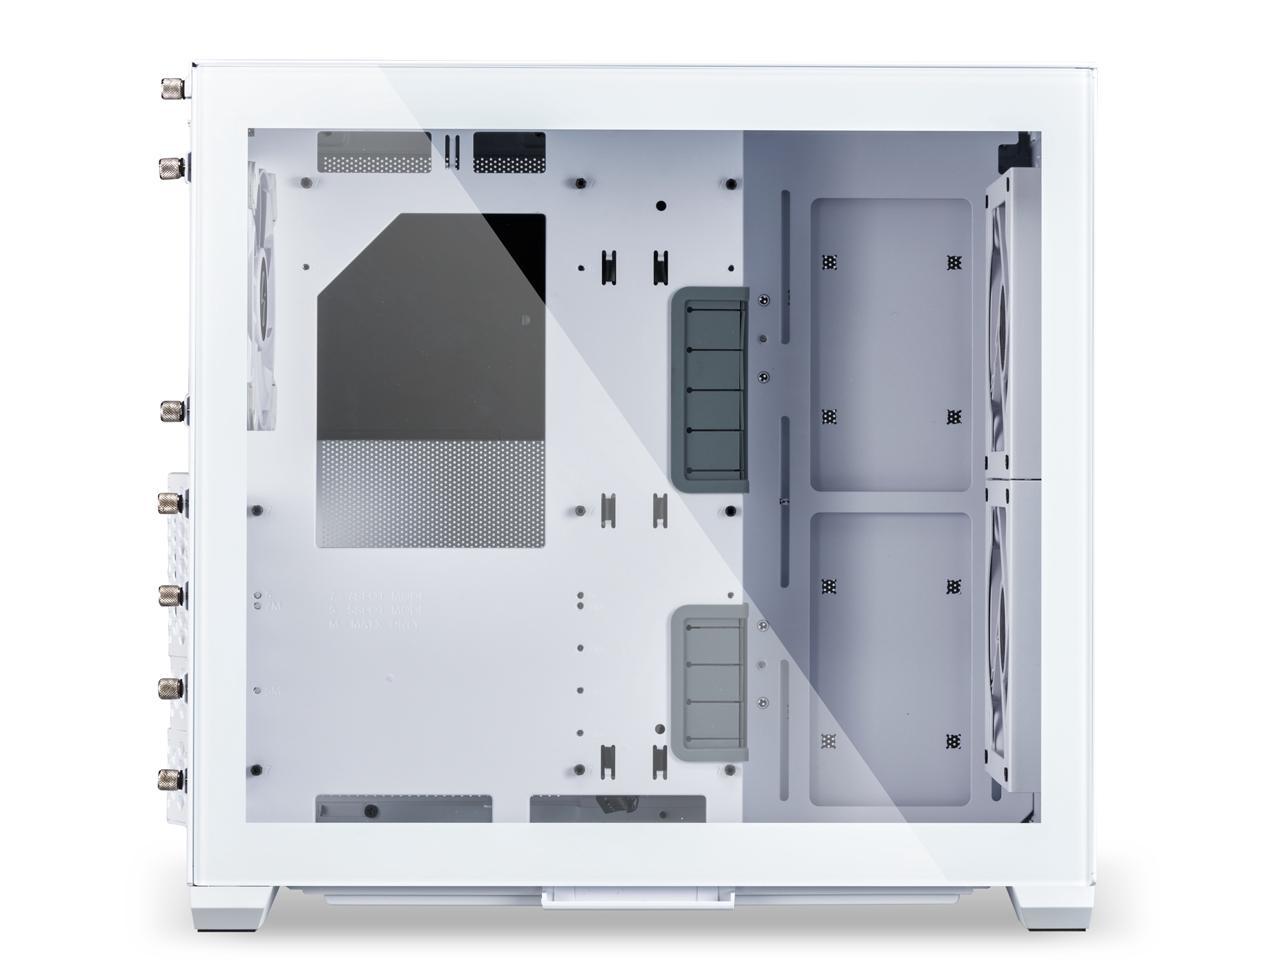 LIAN LI O11 AIR MINI White SPCC / Aluminum / Tempered Glass ATX Mini Tower Computer Case-- O11AMW